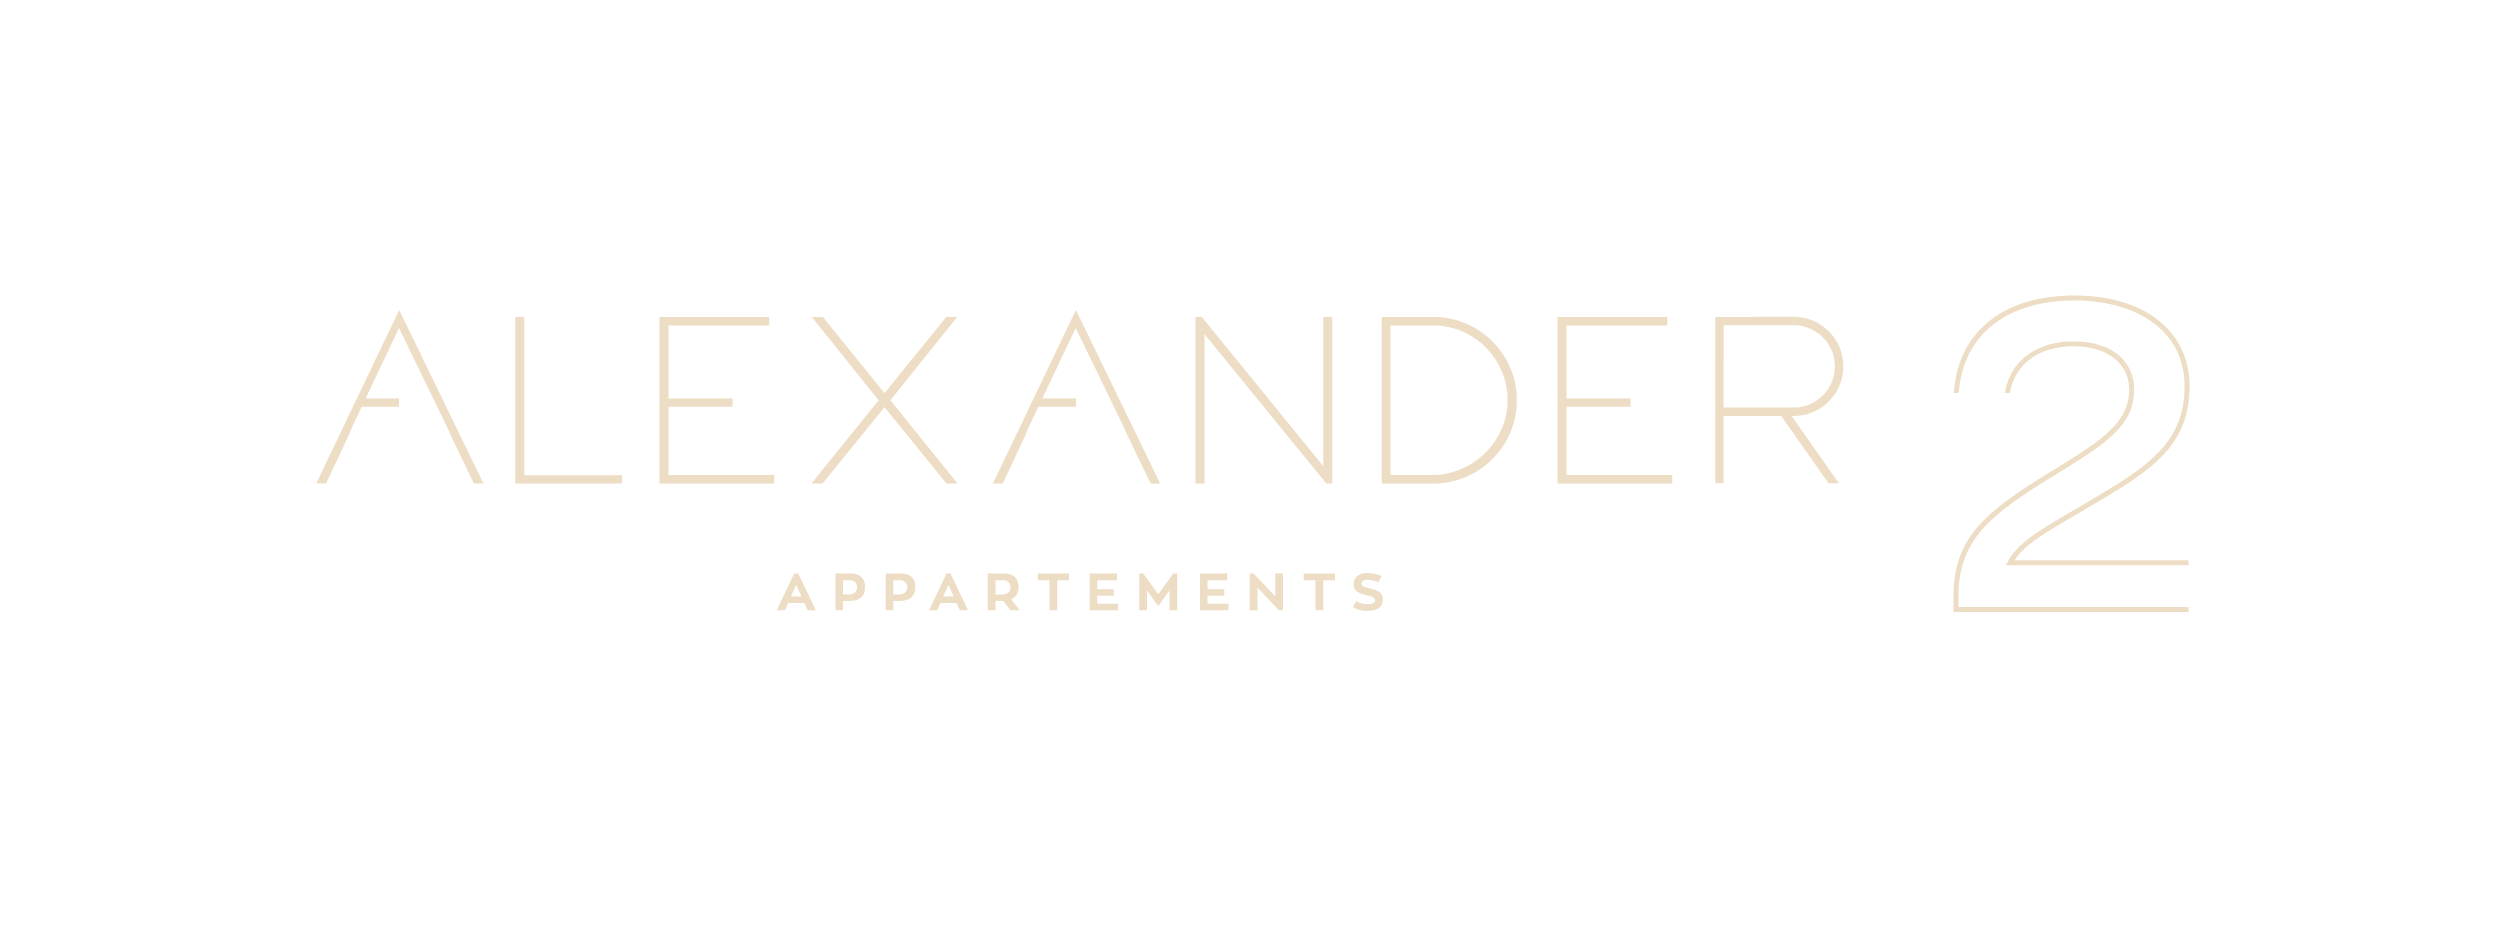 Alexander Appartements 2 Logo